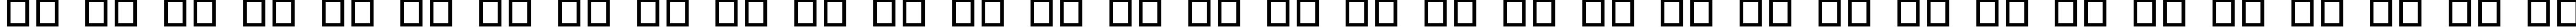 Пример написания русского алфавита шрифтом Aunchanted Expanded